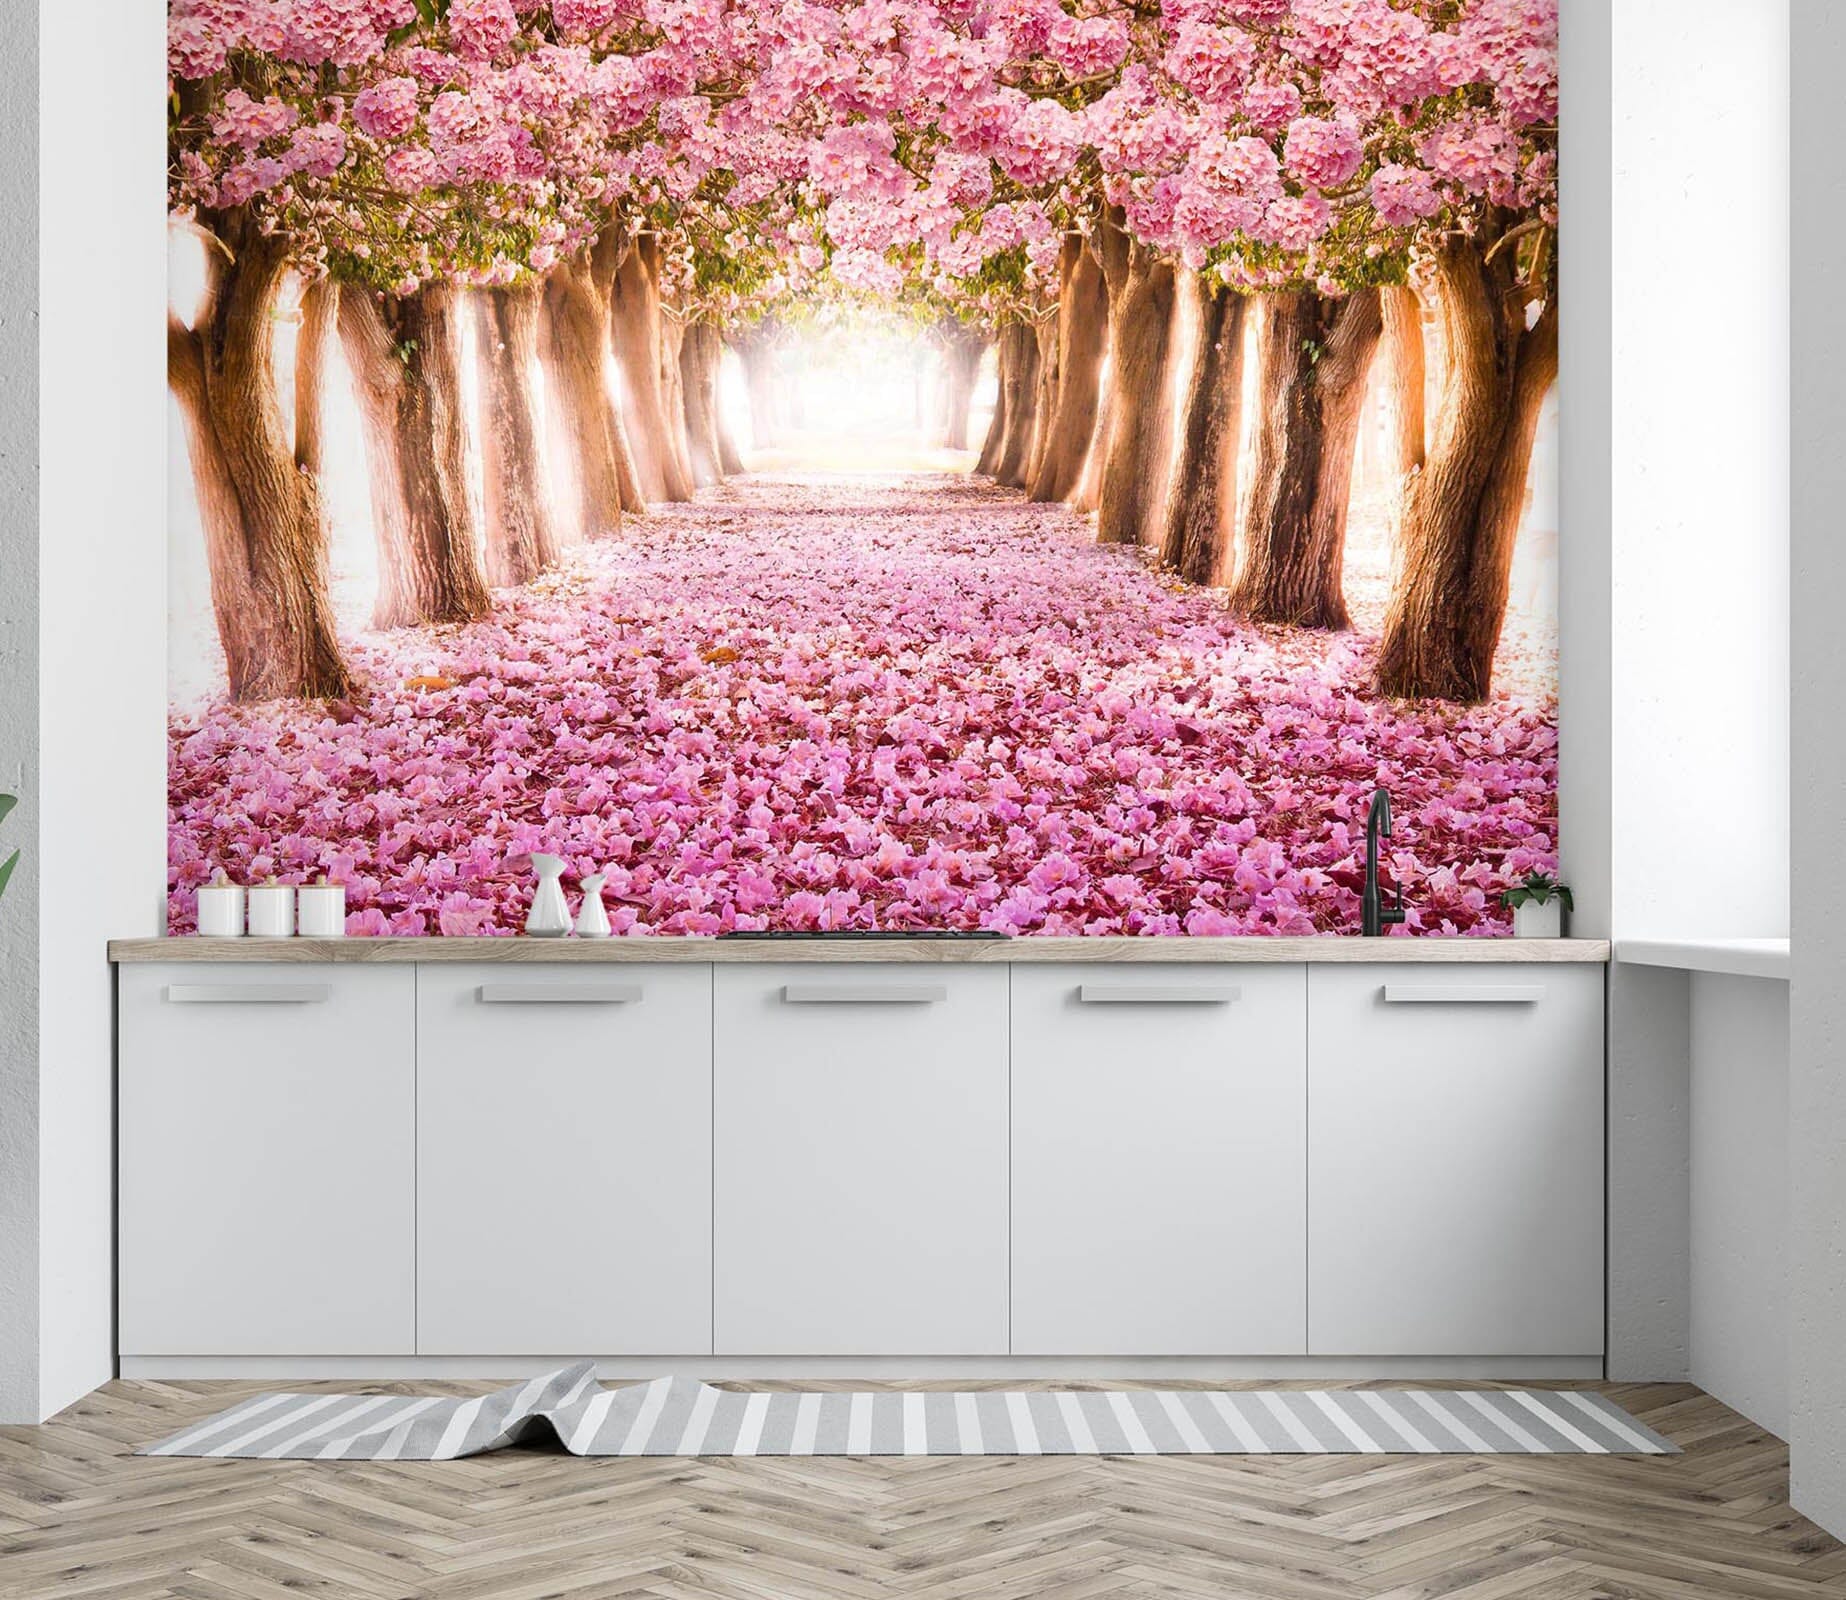 3D Cherry Blossom 148 Wall Murals Wallpaper AJ Wallpaper 2 